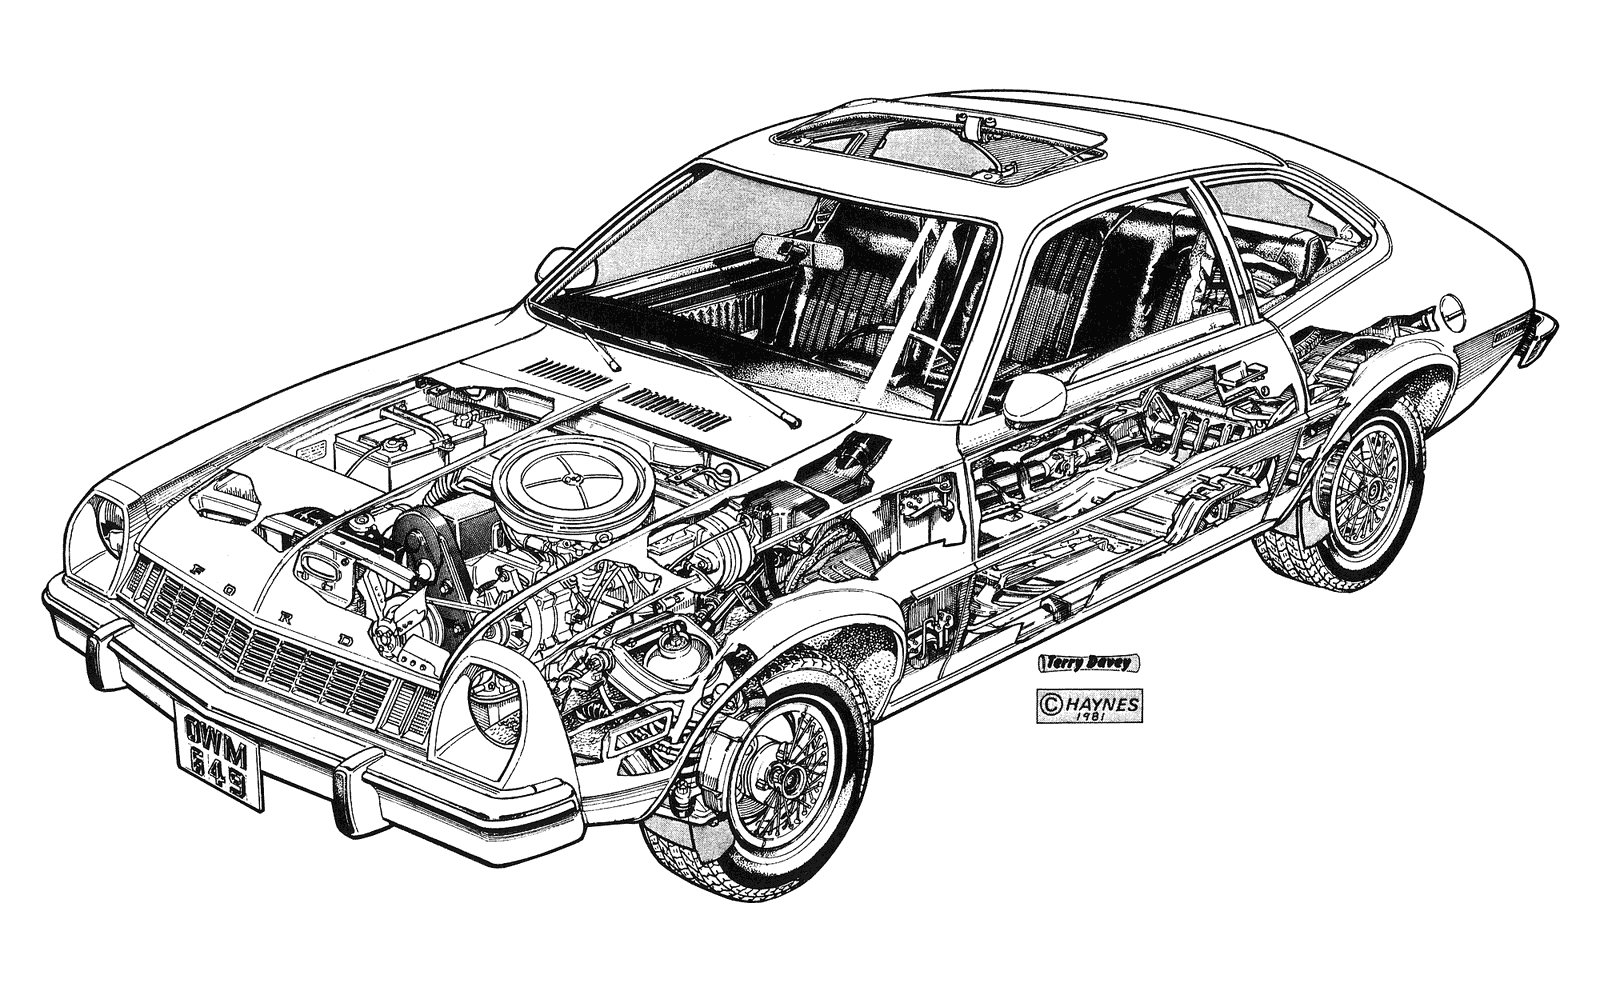 Ford Pinto cutaway drawing